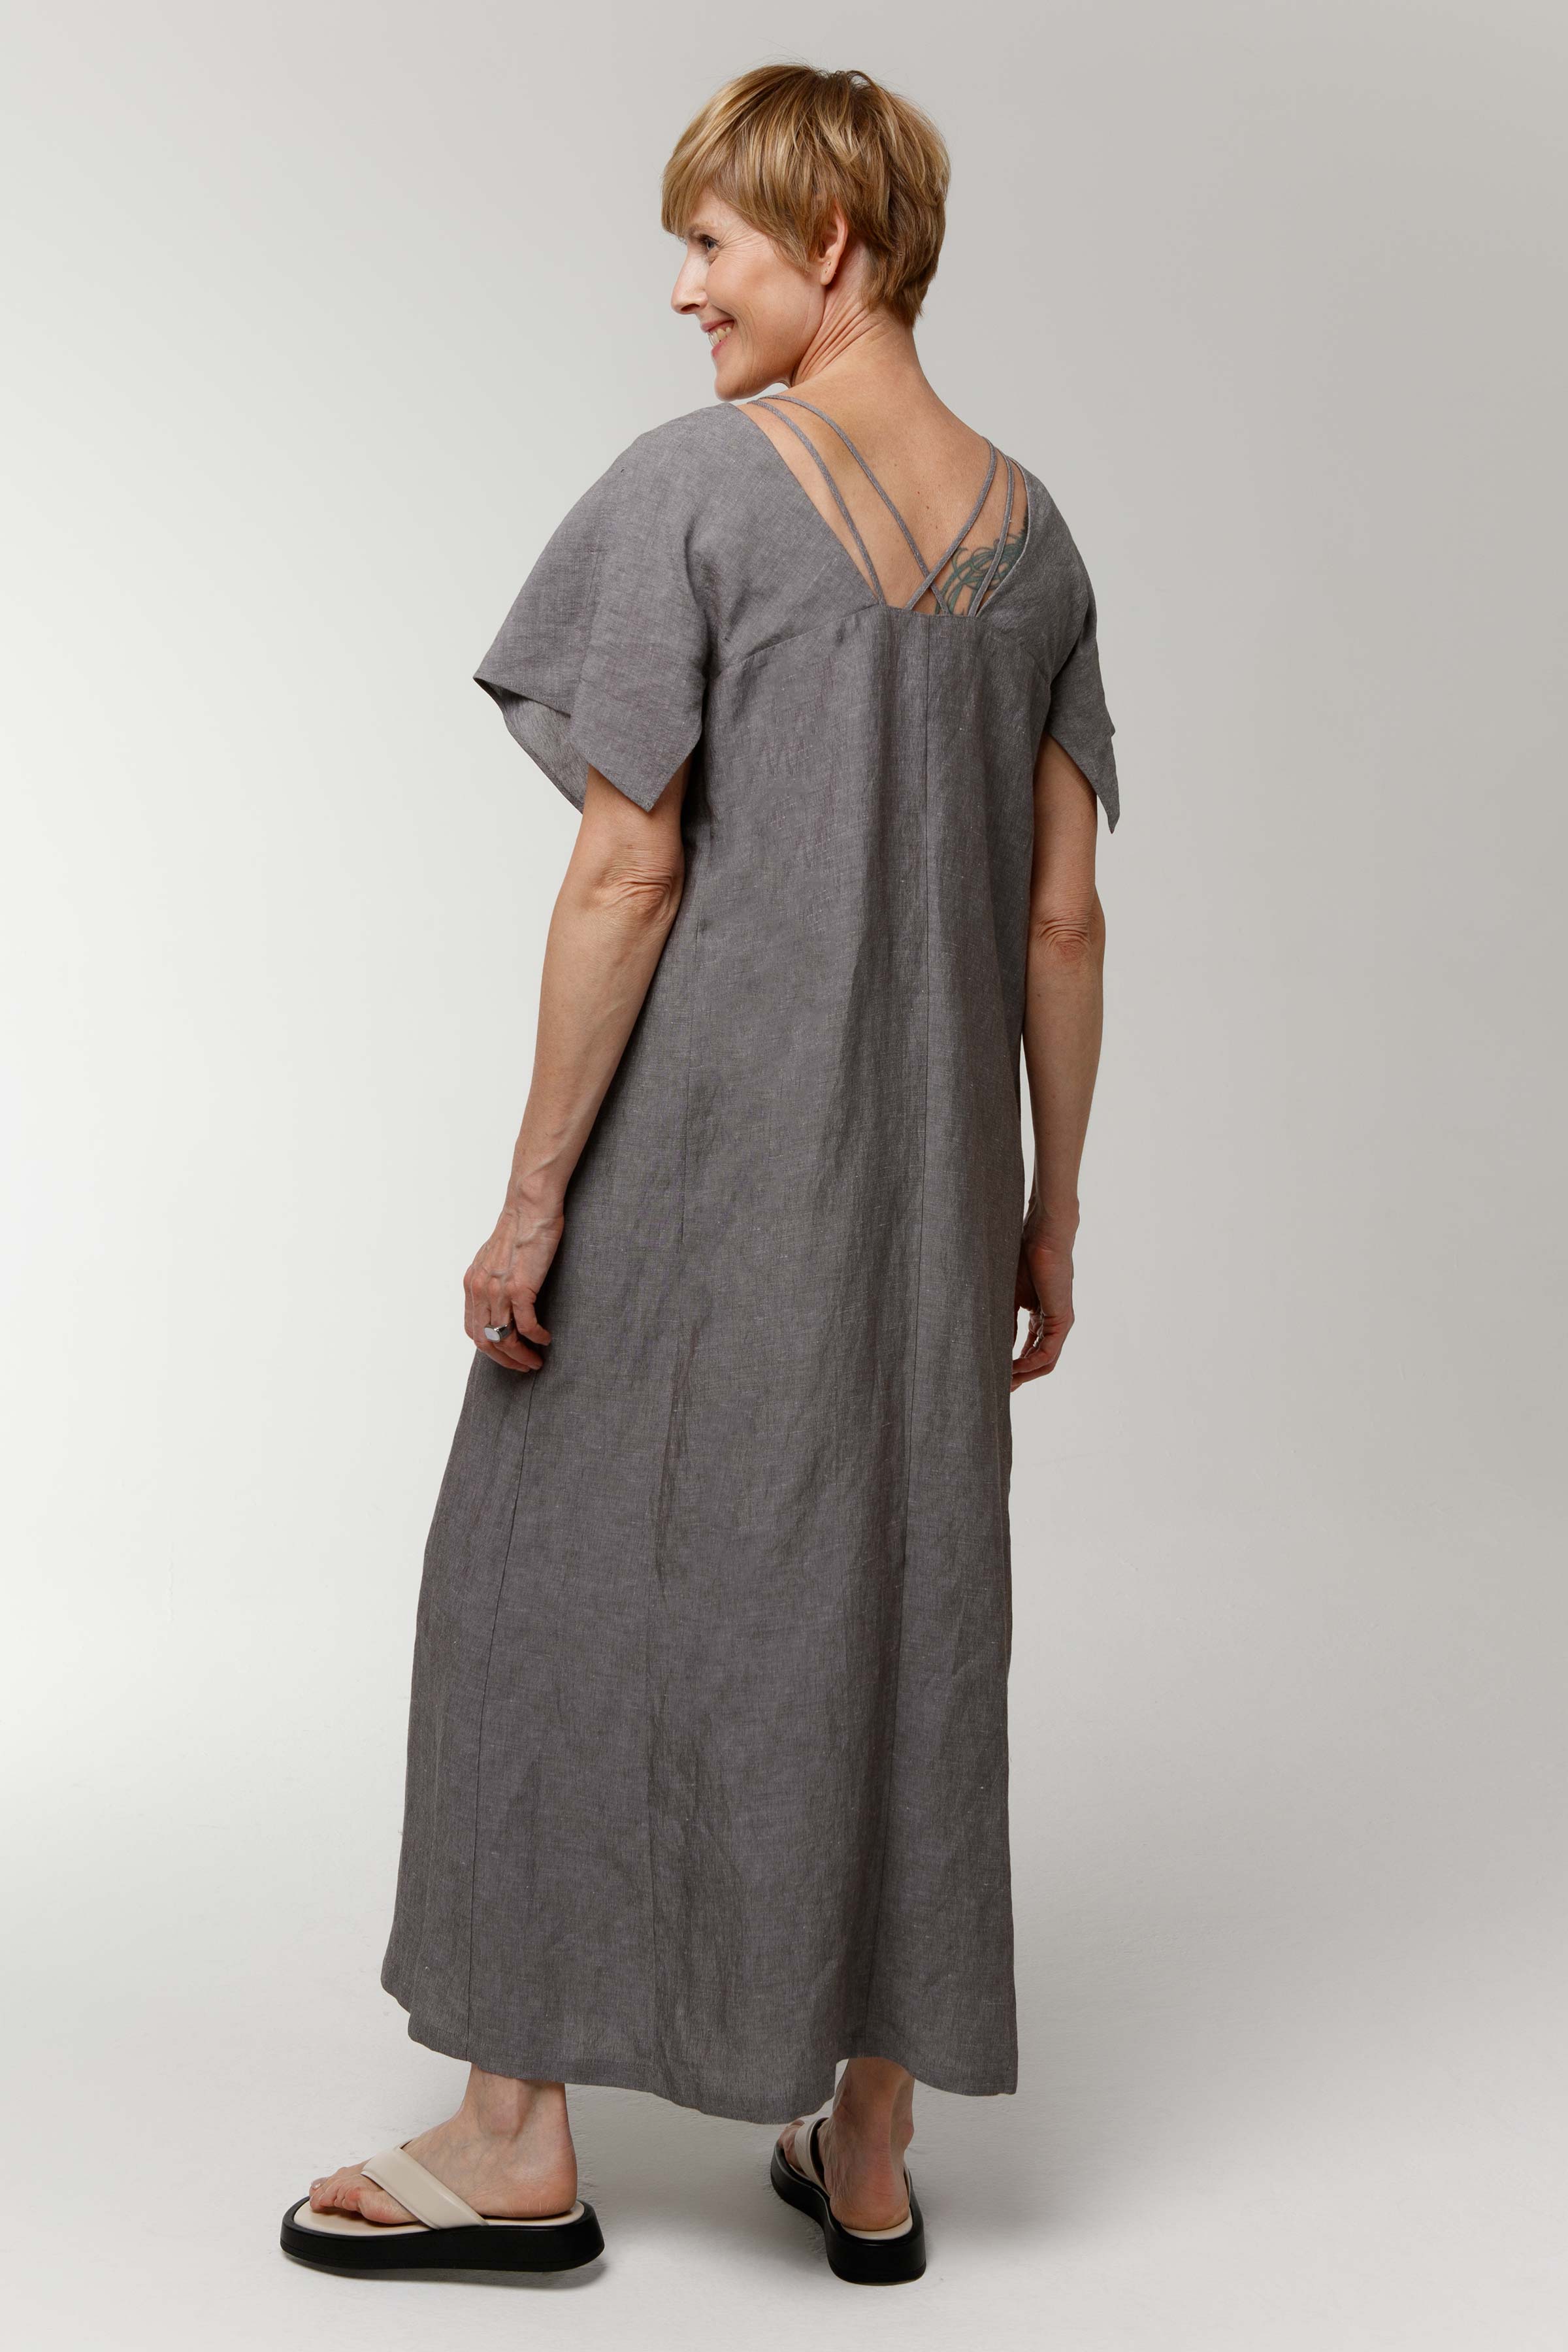 Платье с крылышками, лён 15 Серый меланж (melange gris) от Lesel (Лесель)! Заказывайте по ✆ 8 (800) 777 02 37